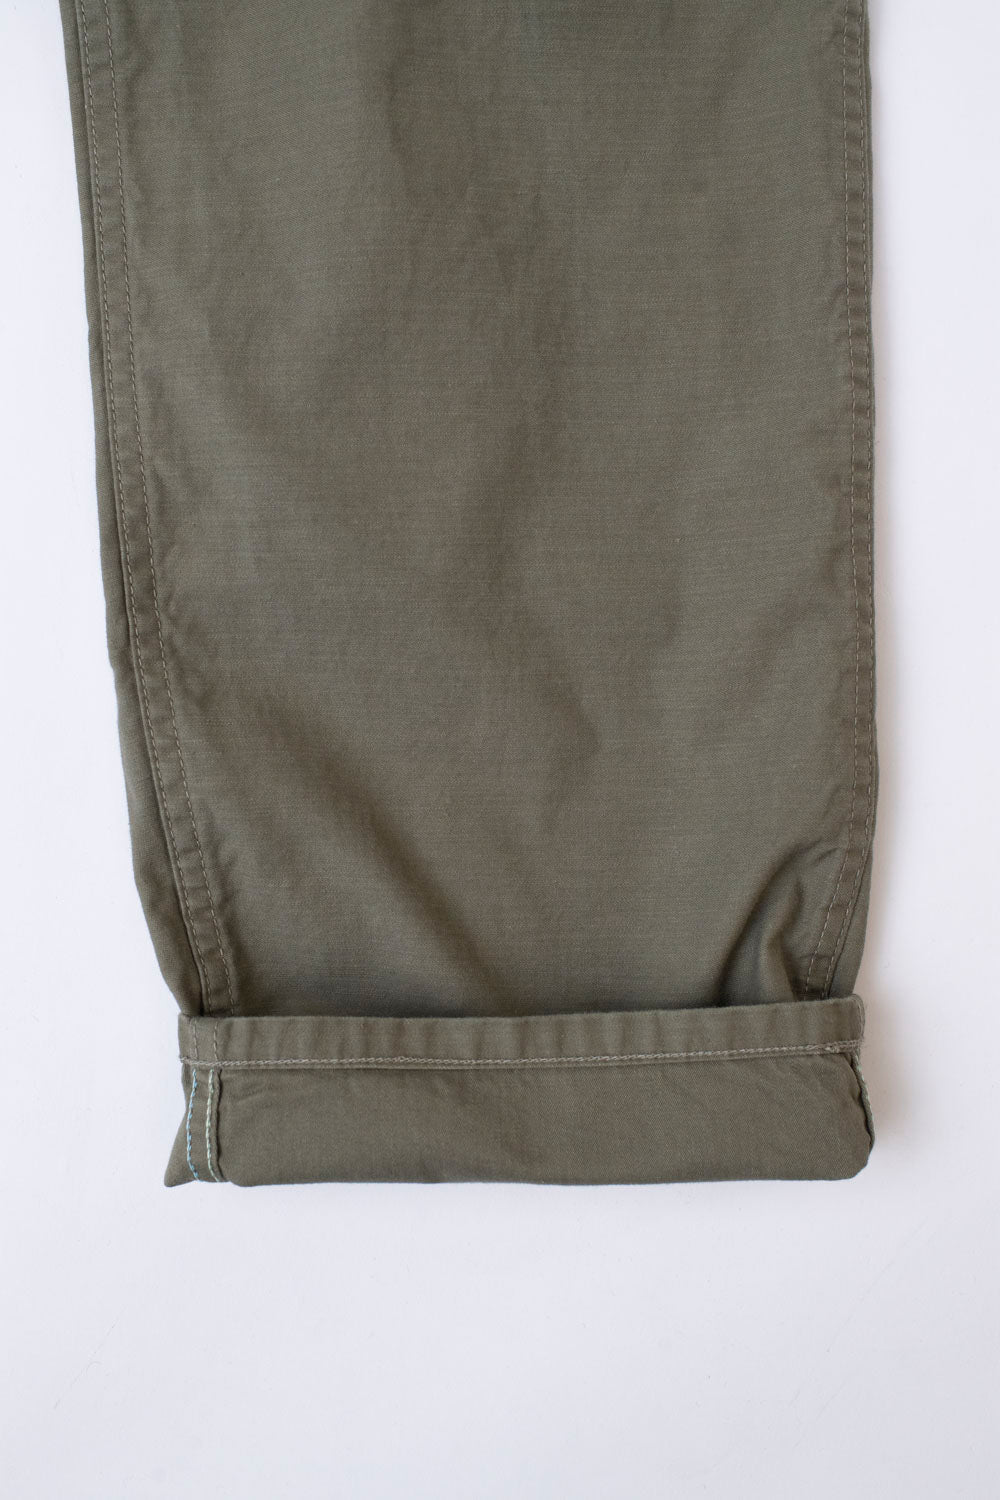 1301-VMO - Army Pants Vintage Sateen - Olive